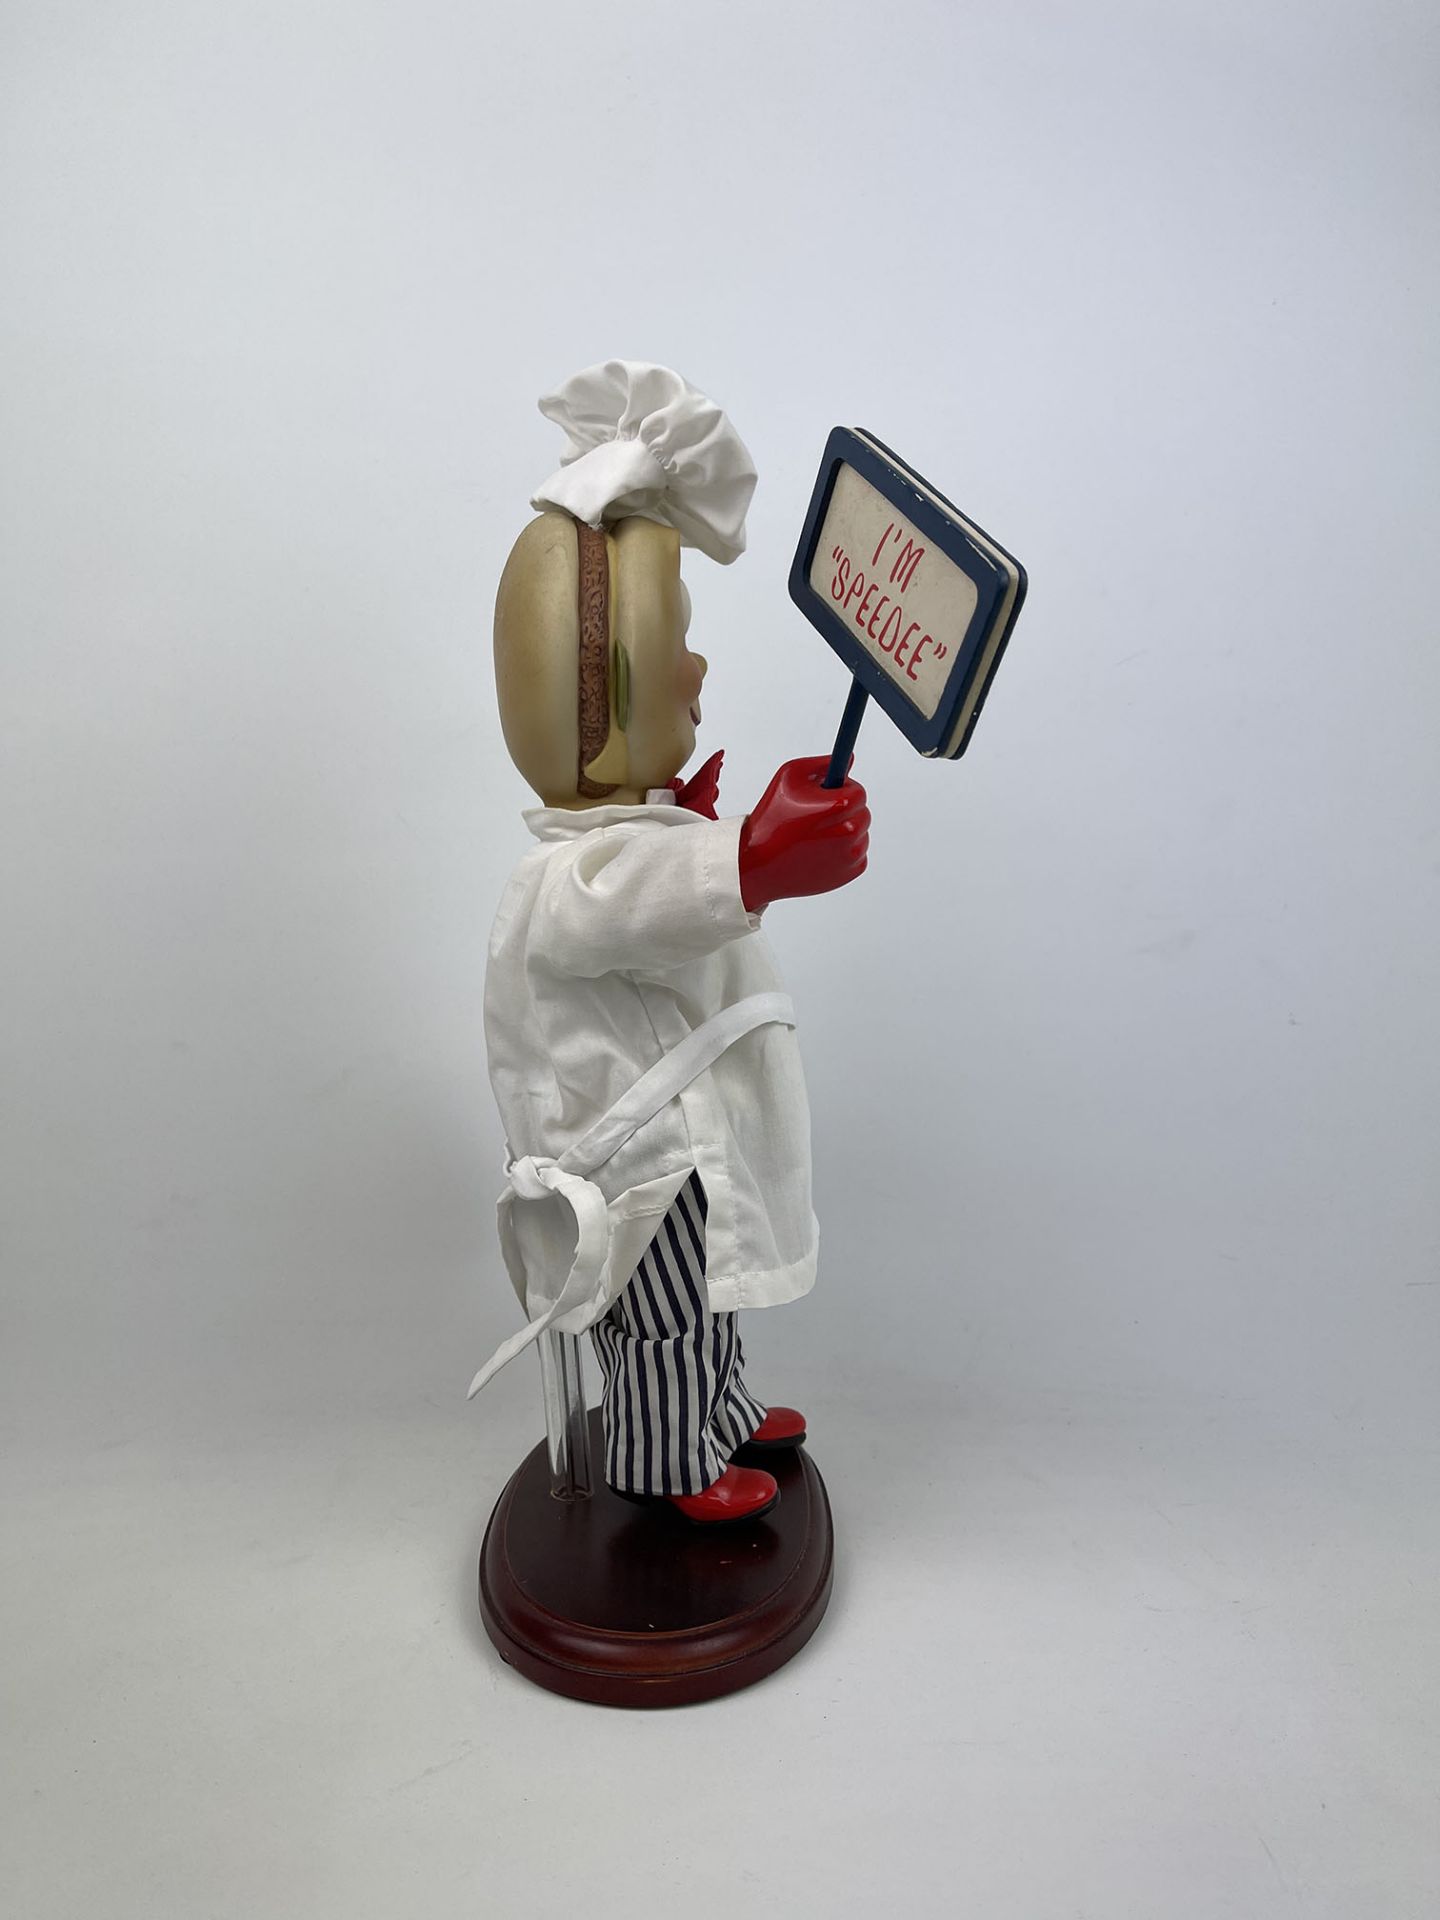 1995 40th Anniversary McDonald's "Speedee" Porcelain Figure - Image 5 of 12